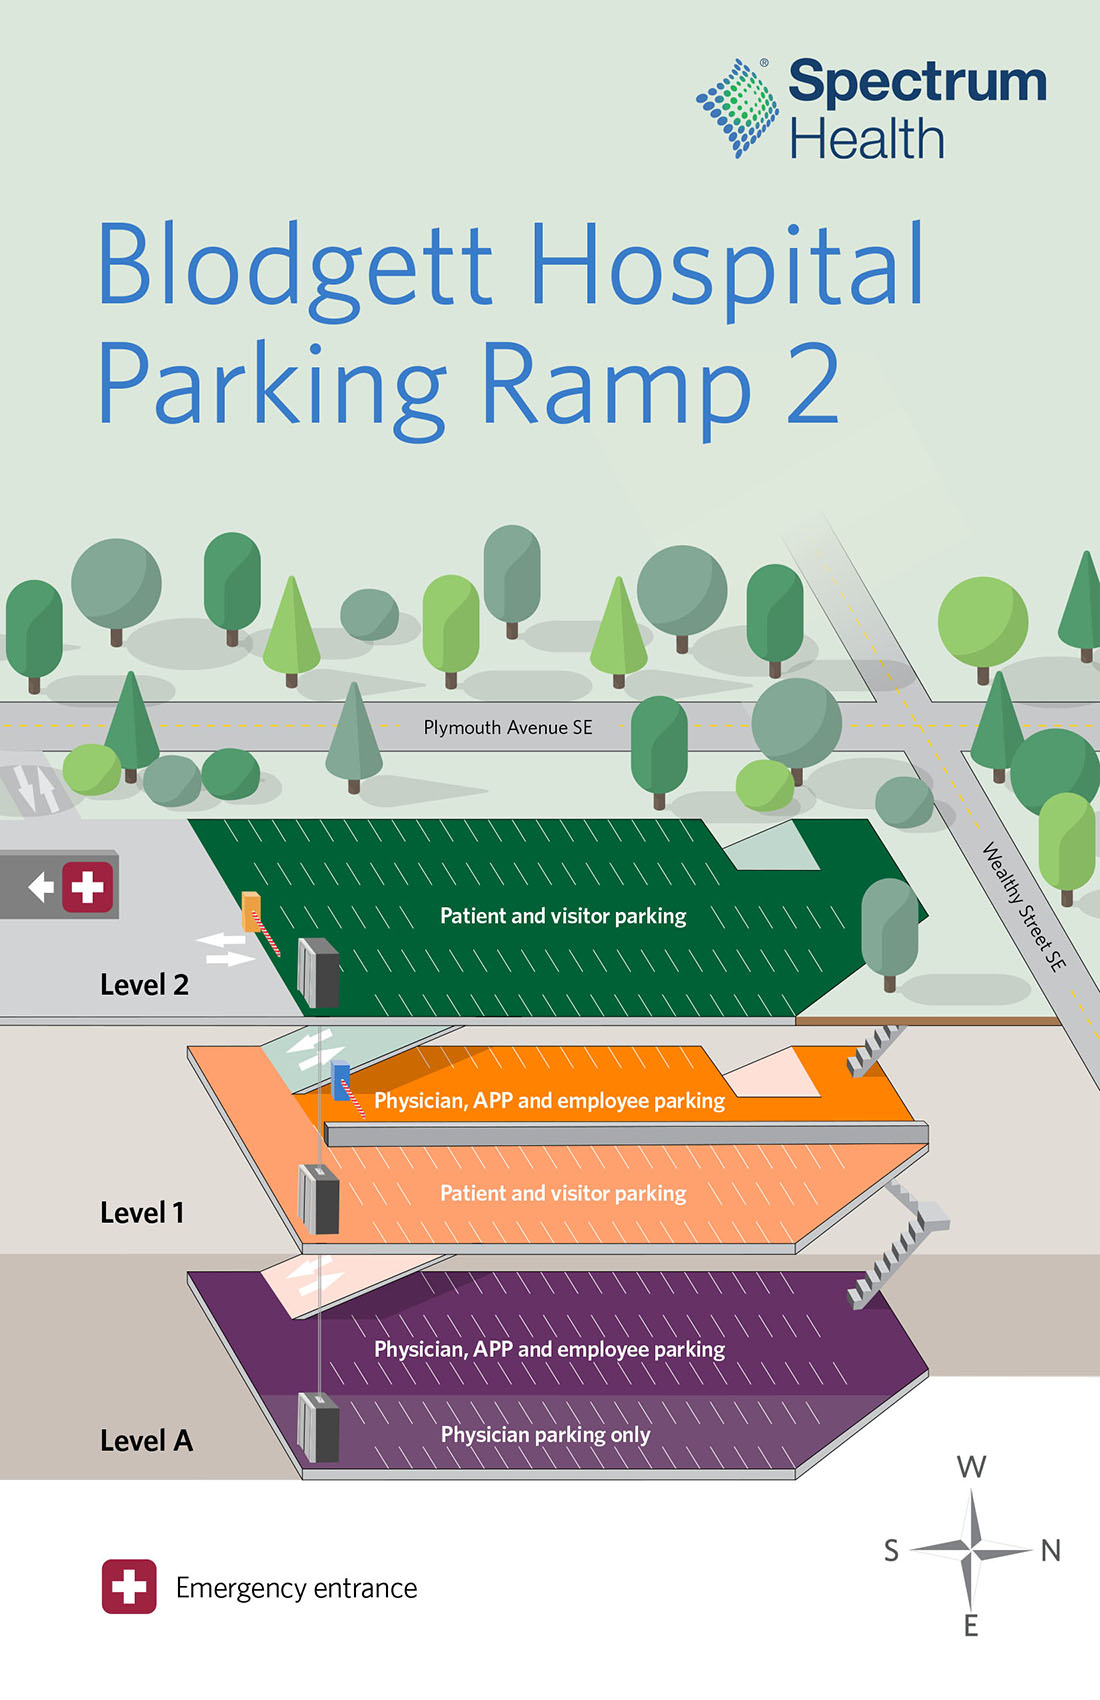 Overall parking setup diagram